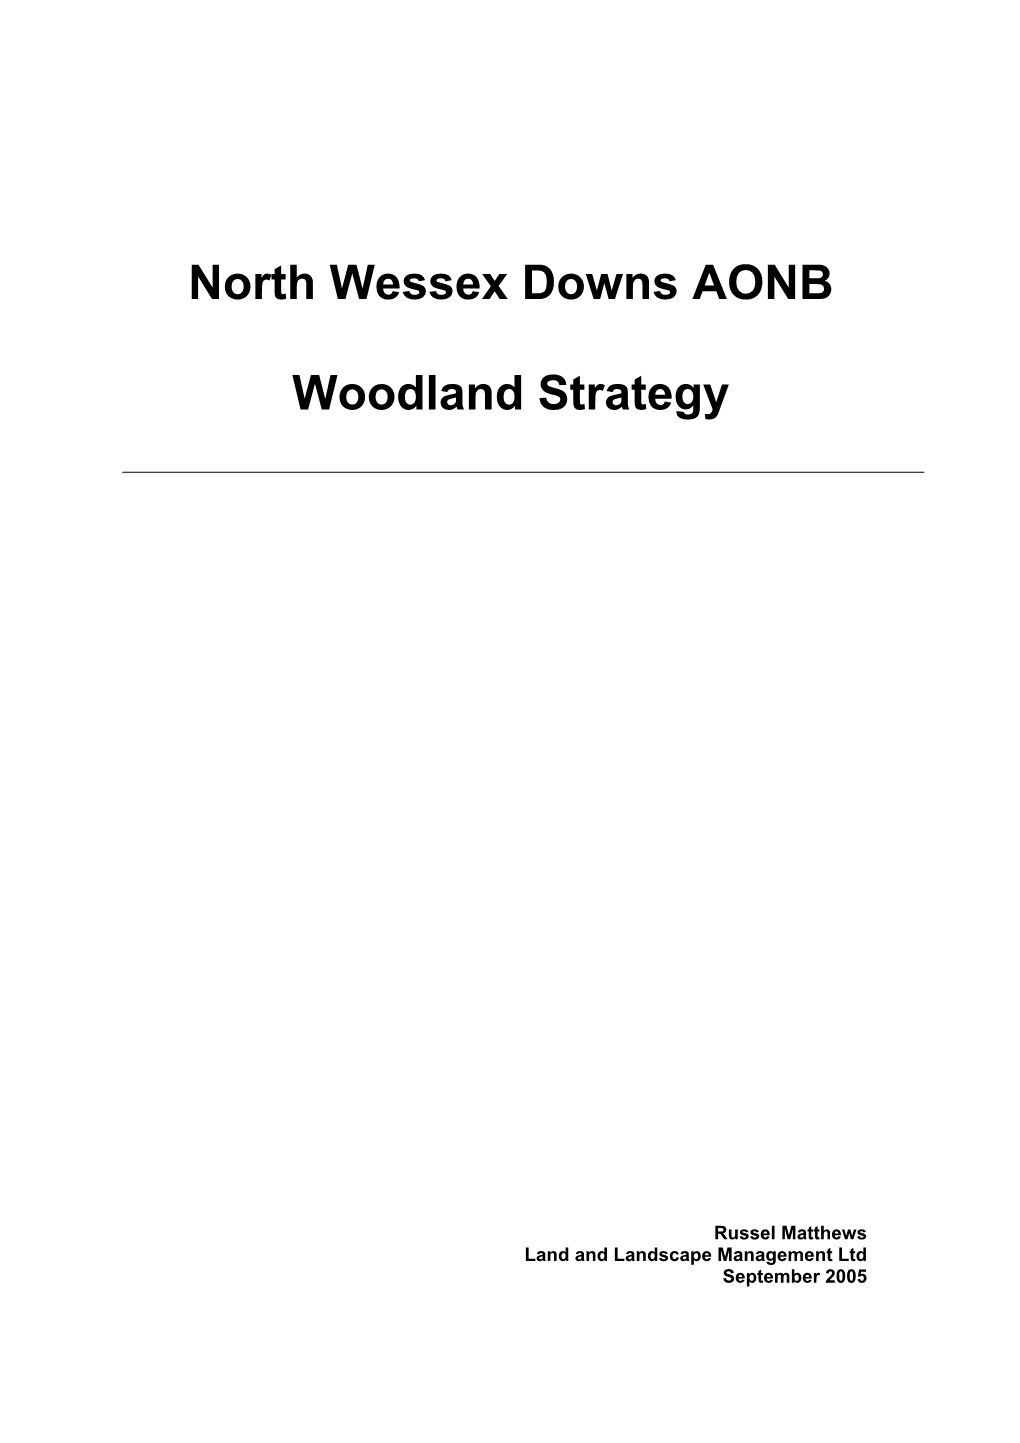 Woodland Strategy